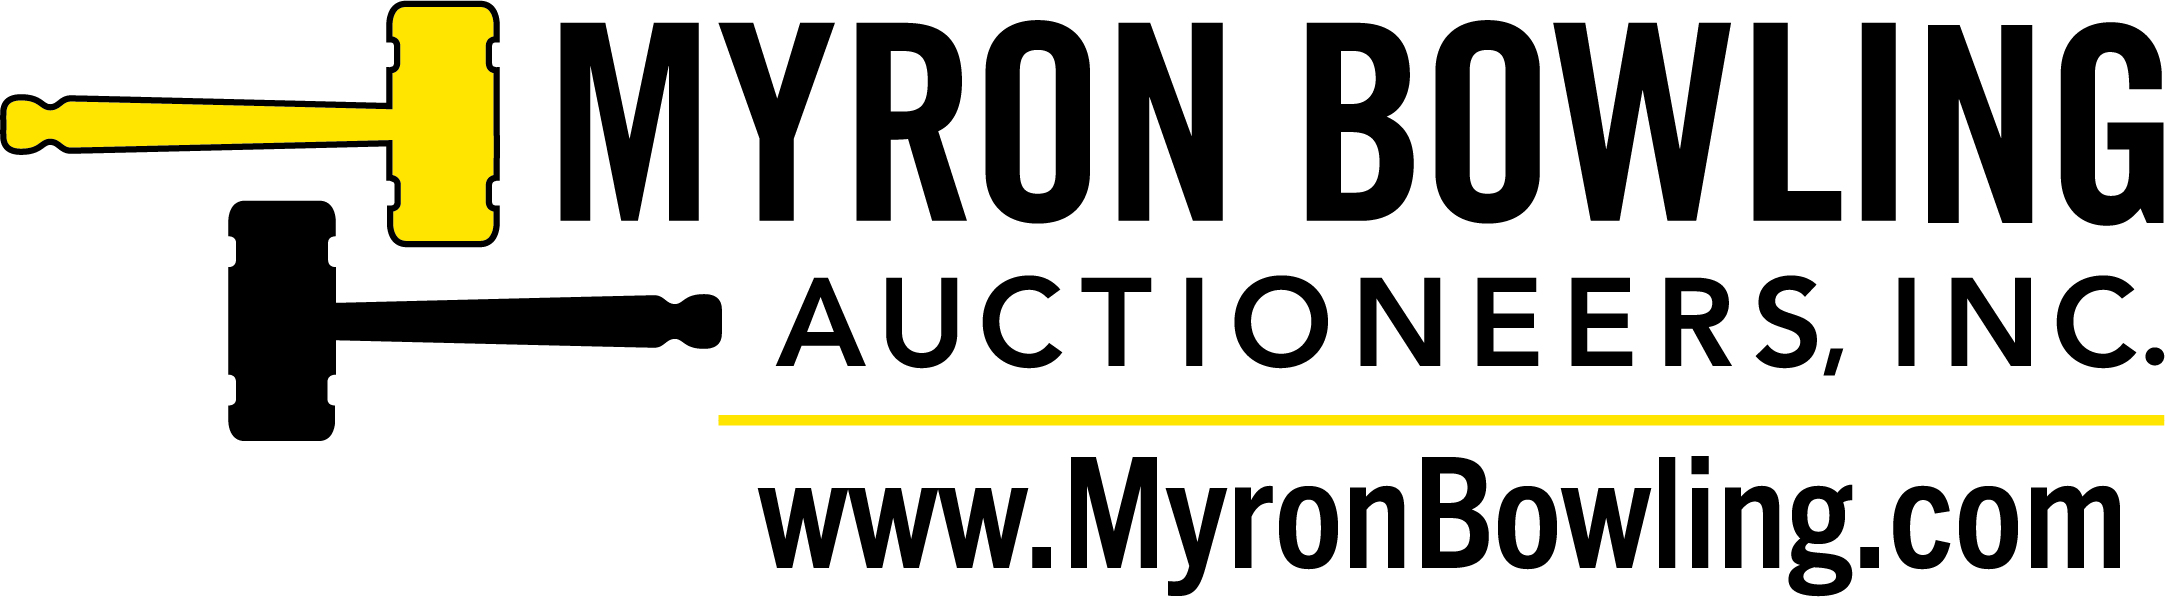 Myron Bowling Auctioneers, Inc.